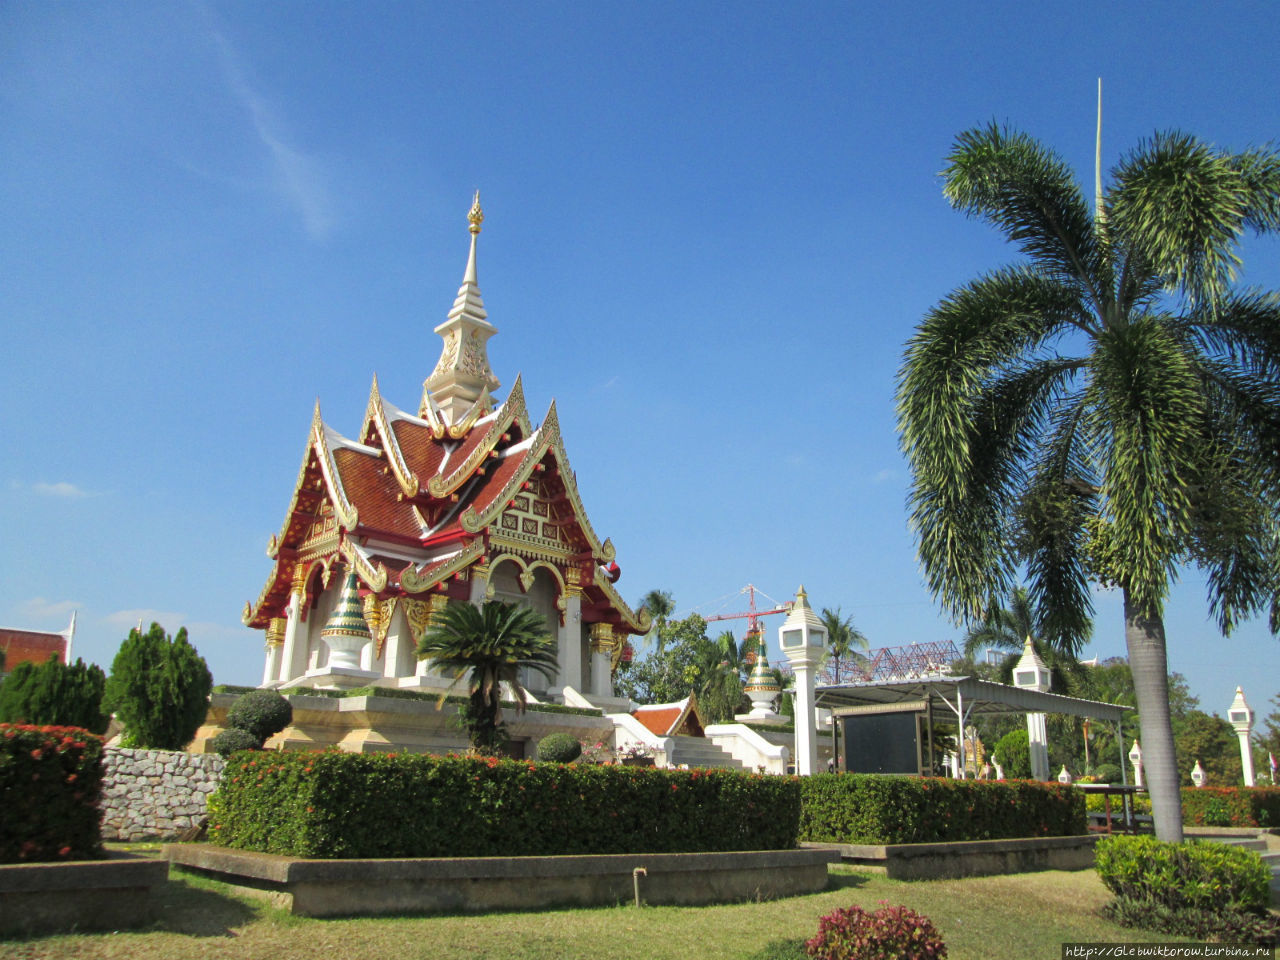 Прогулка по центральной площади города Удон-Тани, Таиланд